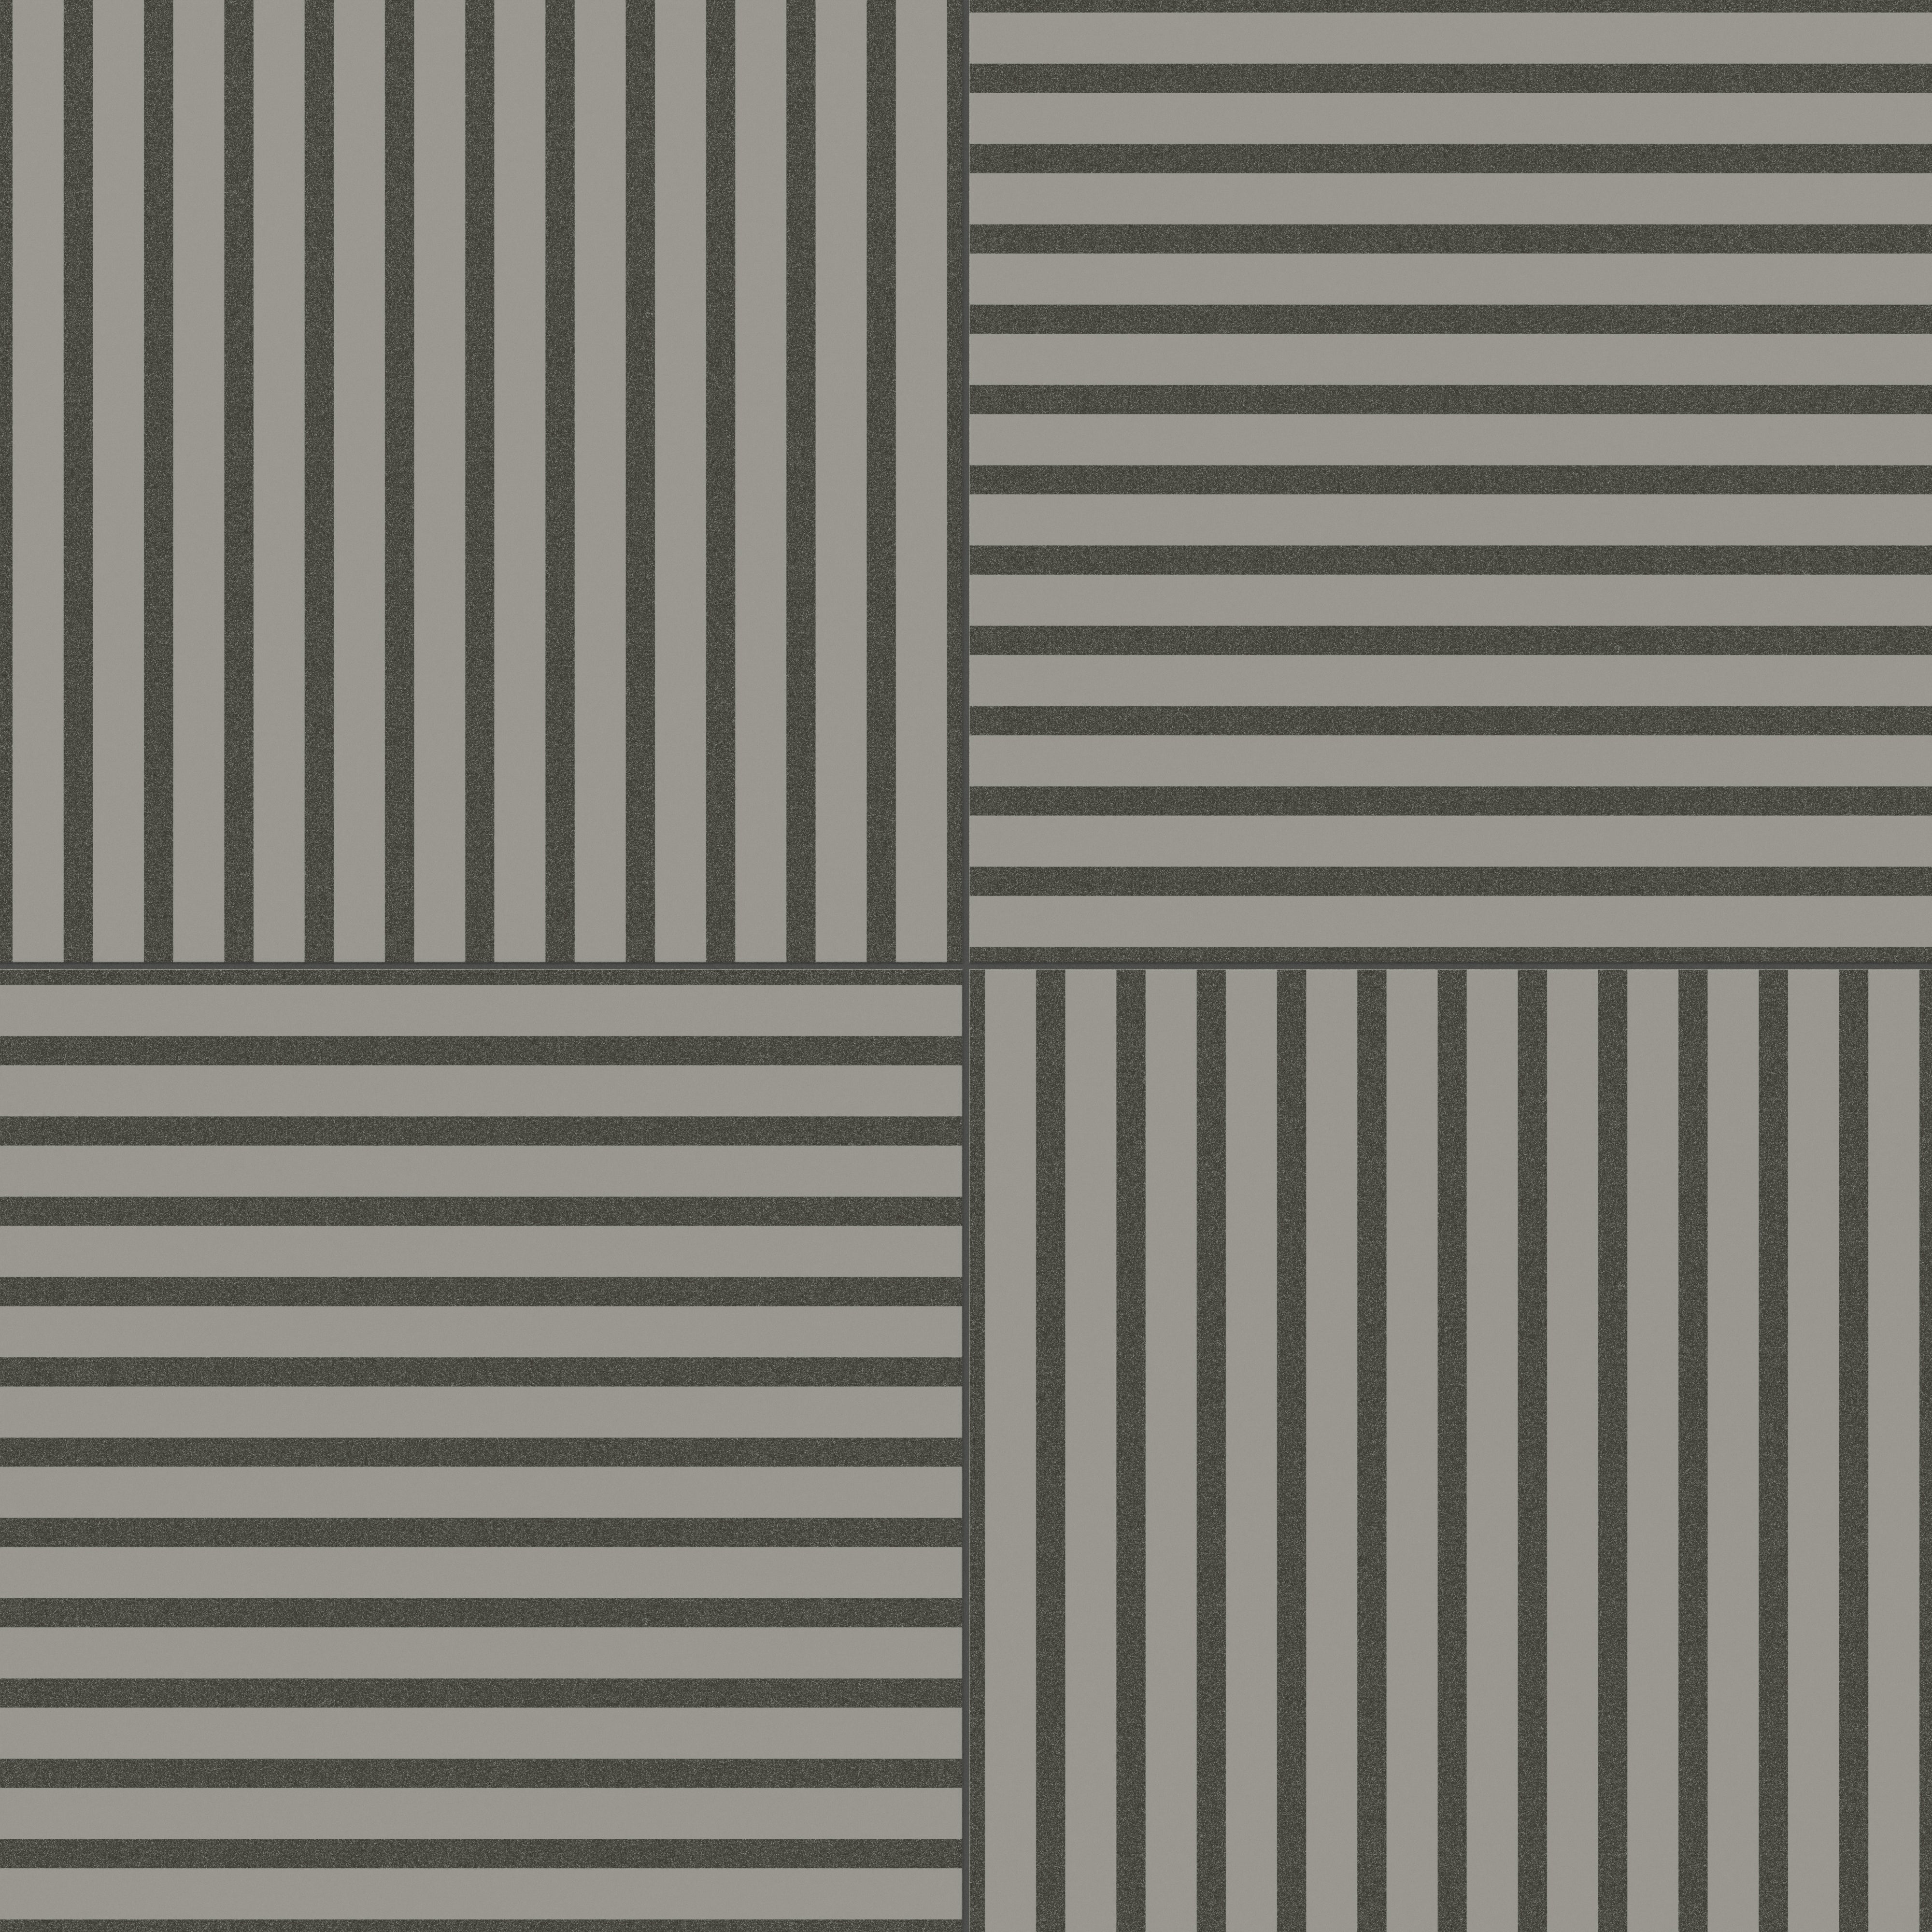 Riley 24x24 Matte Porcelain Tile in Striped Pattern Charcoal